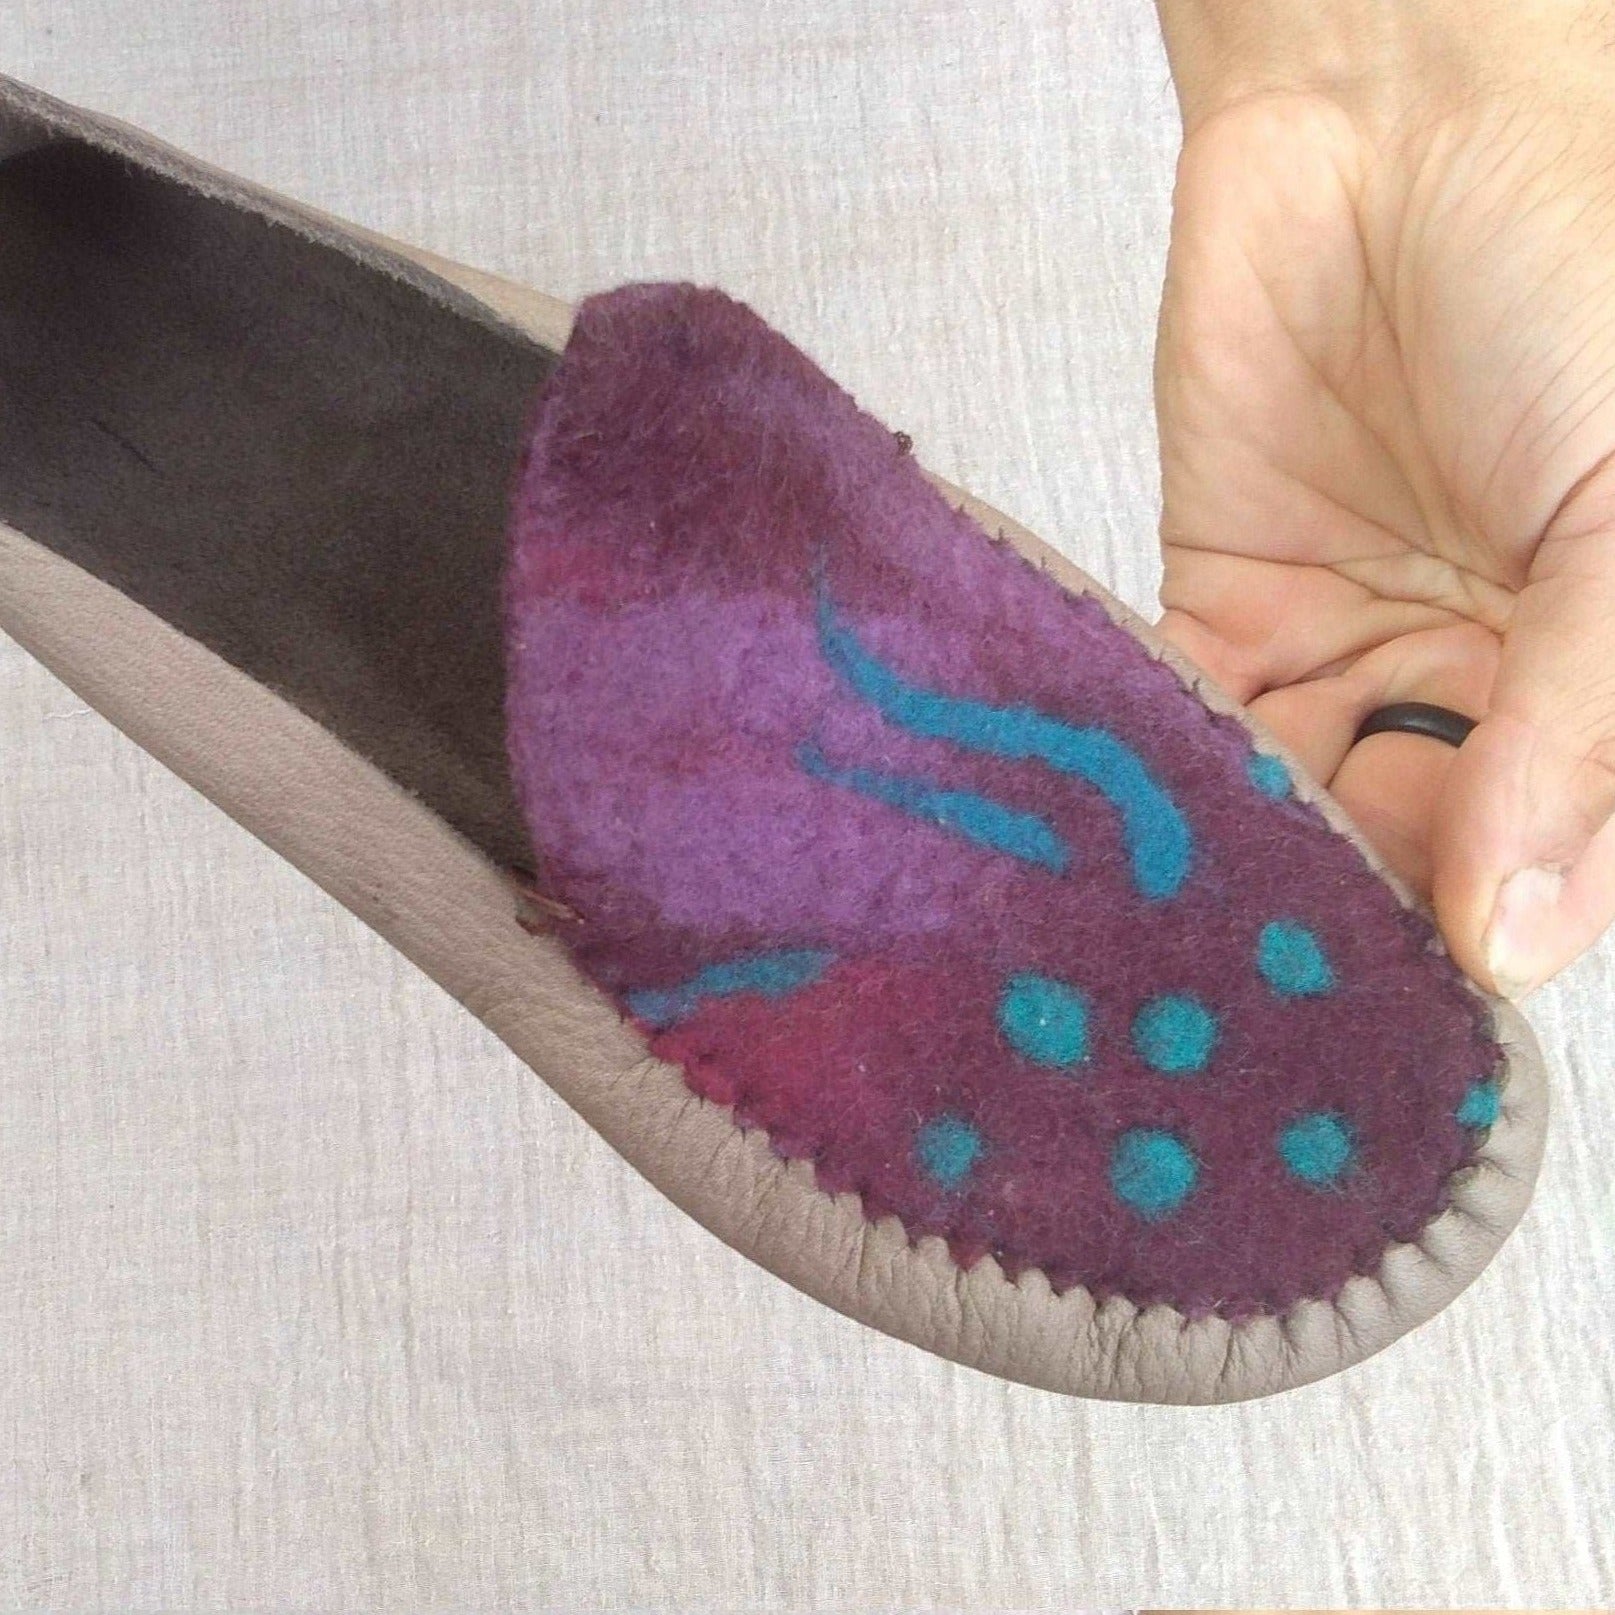 Felt & Leather Barefoot-Shoes / Custom-Made Size 37-39 EU / 6-8 US Earthingmoccasins